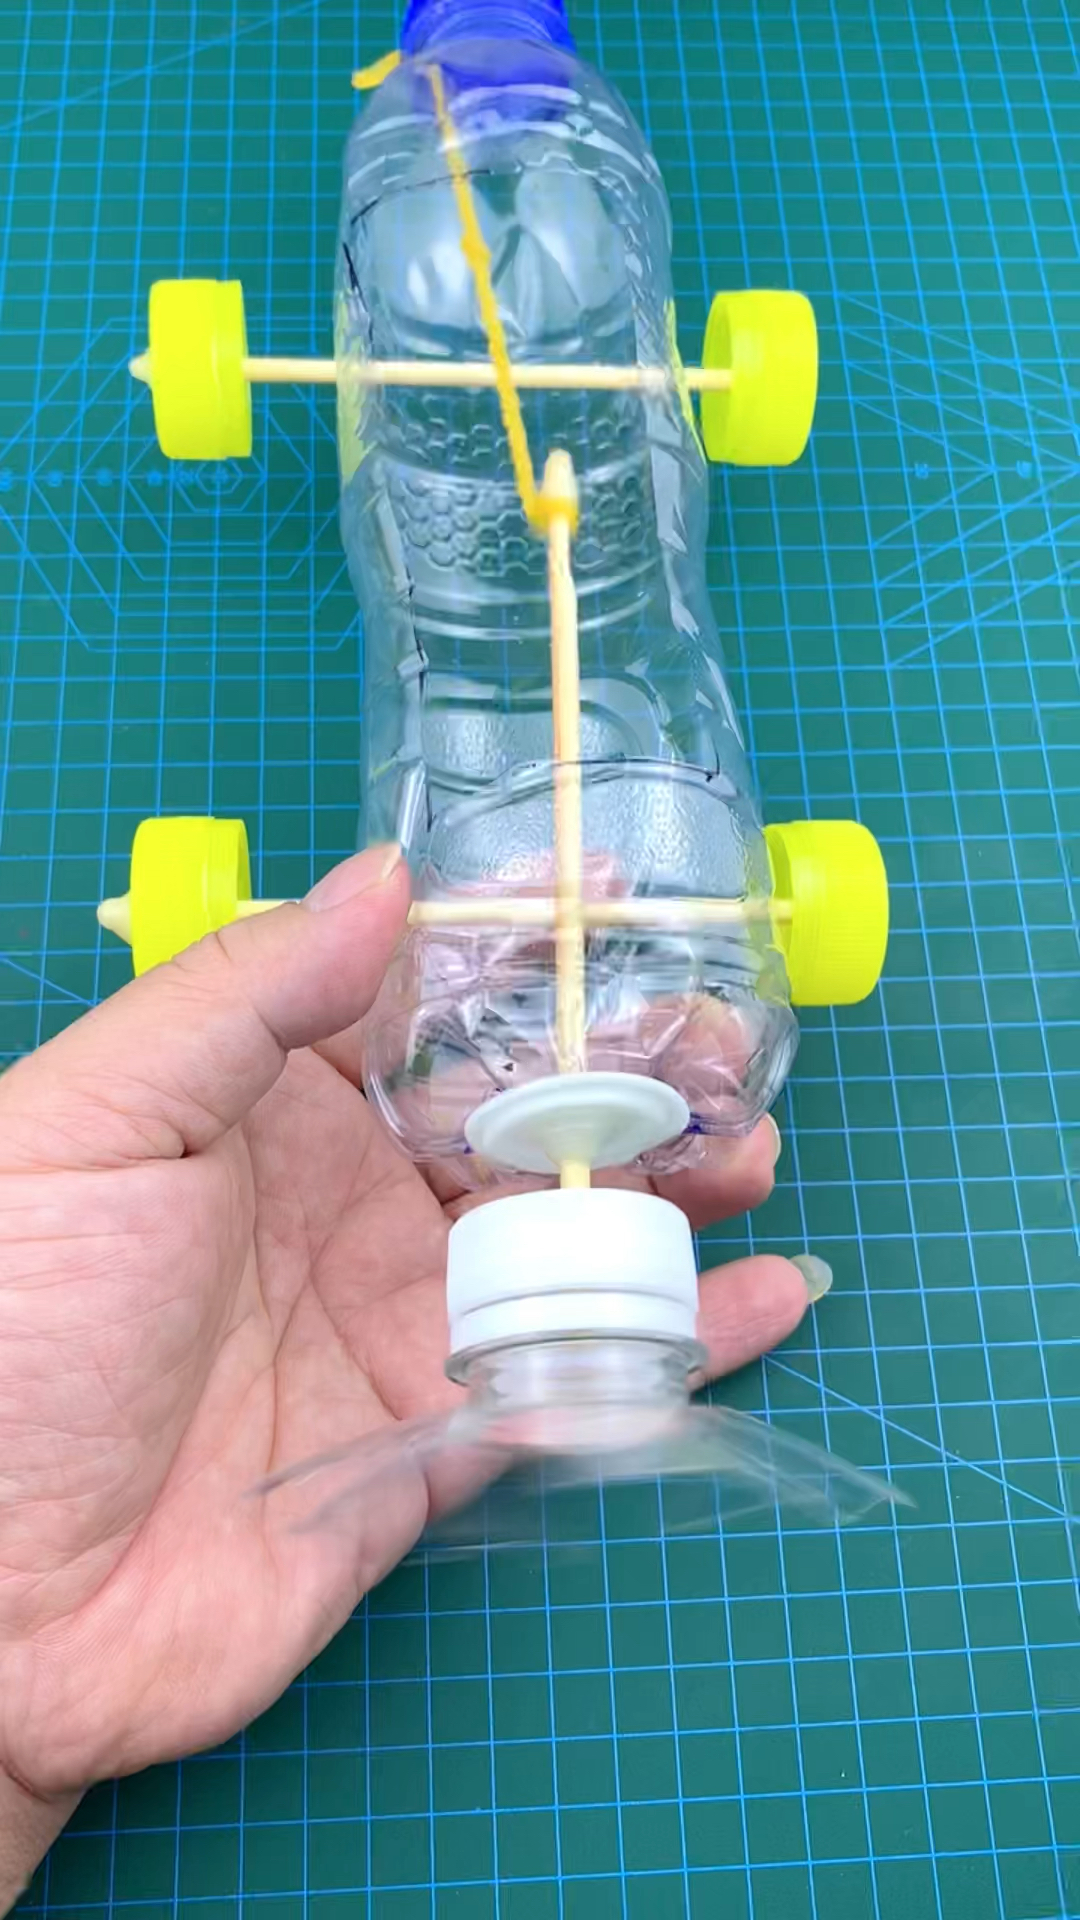 【手工】用饮料瓶做的电动玩具车_哔哩哔哩 (゜-゜)つロ 干杯~-bilibili